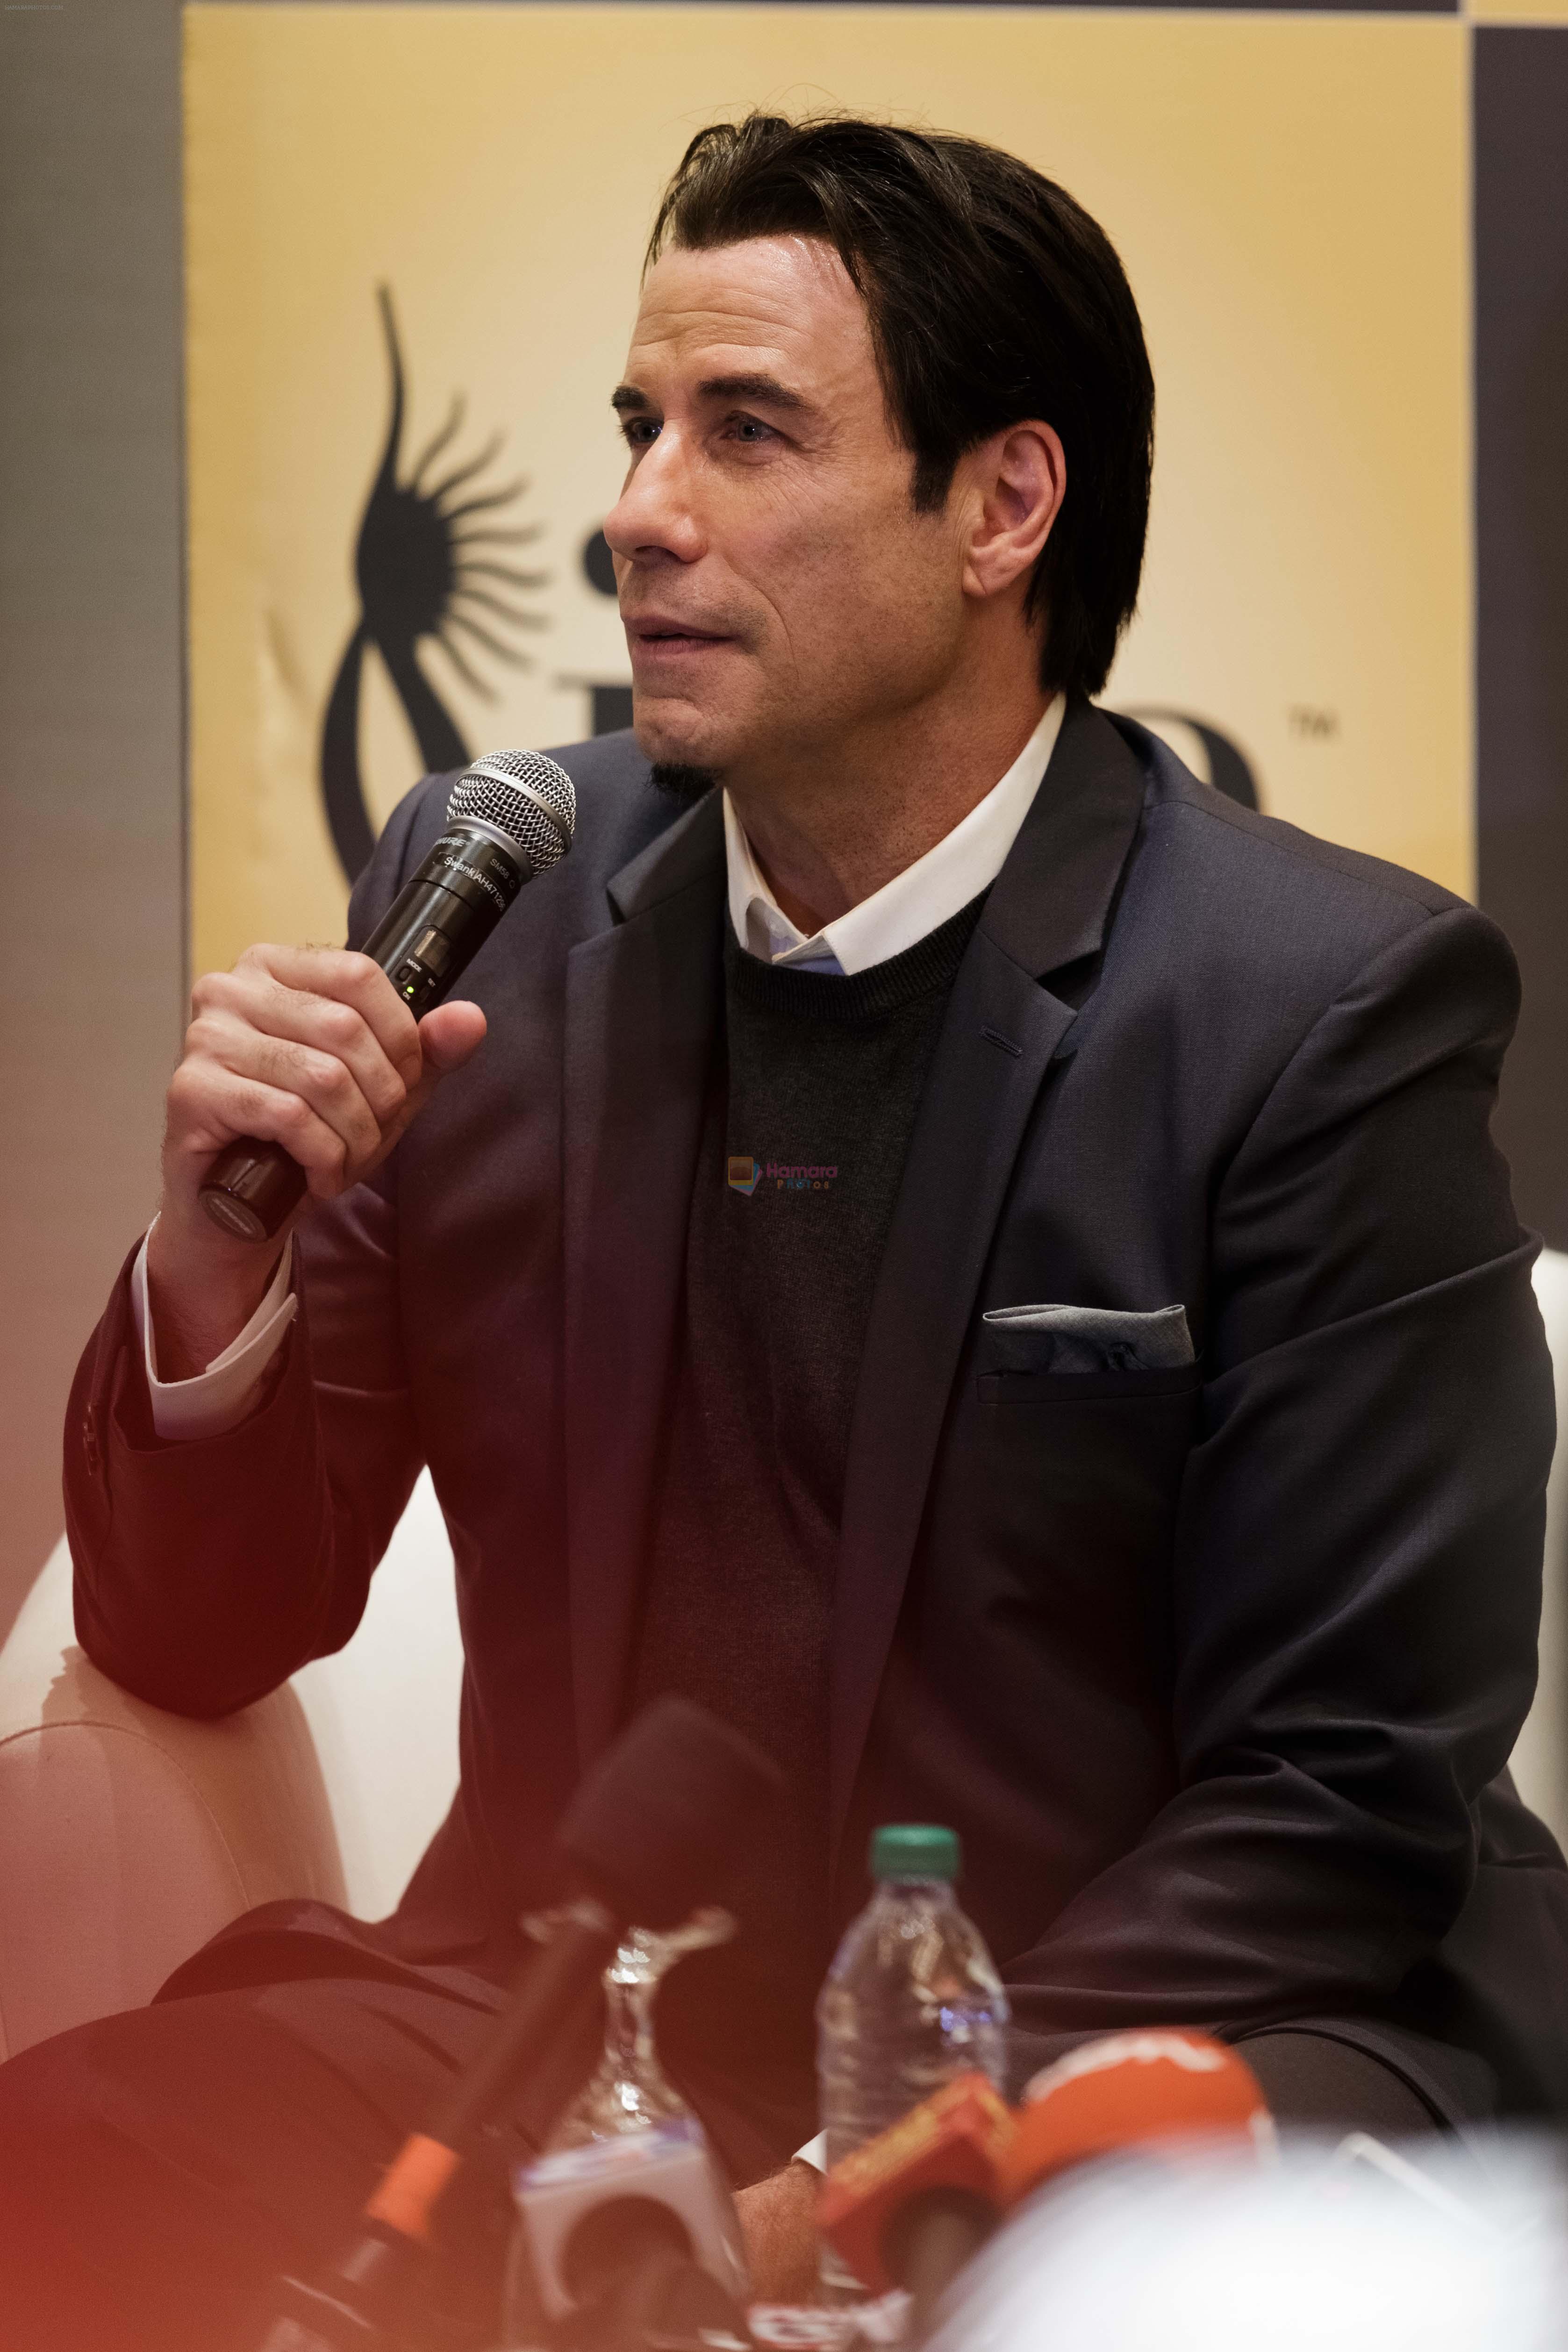 John Travolta Presser on Day 4 at John Travolta Presser on 26th April 2014